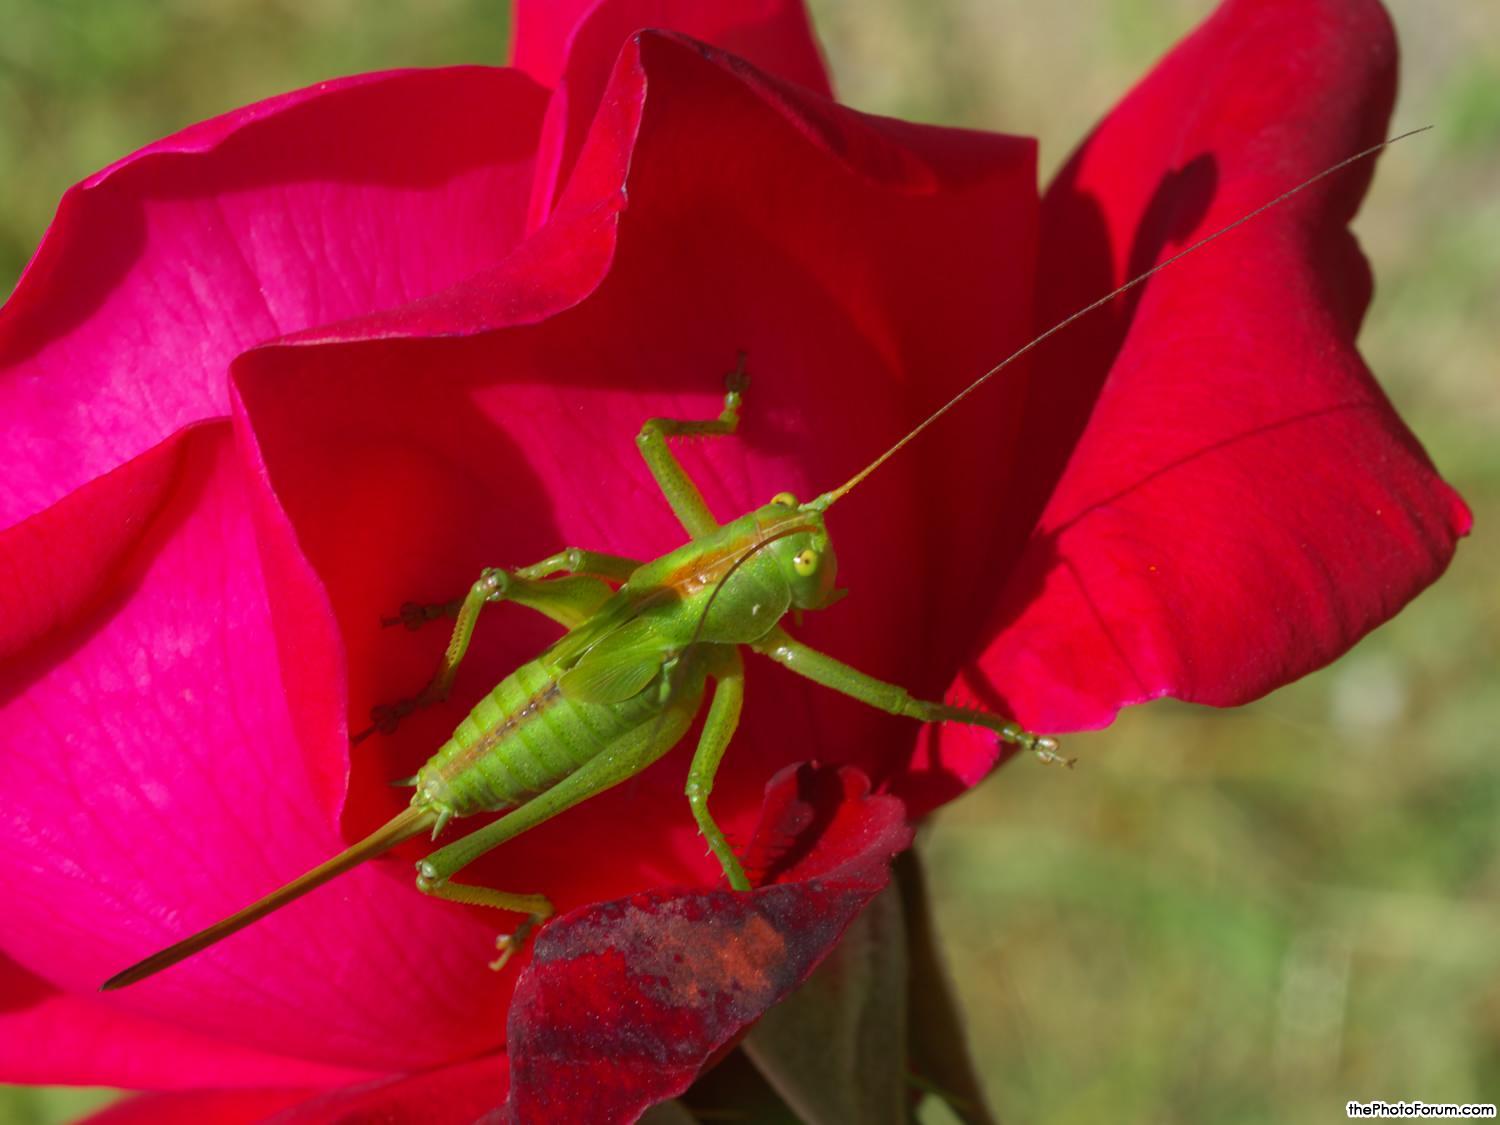 cricket on rose